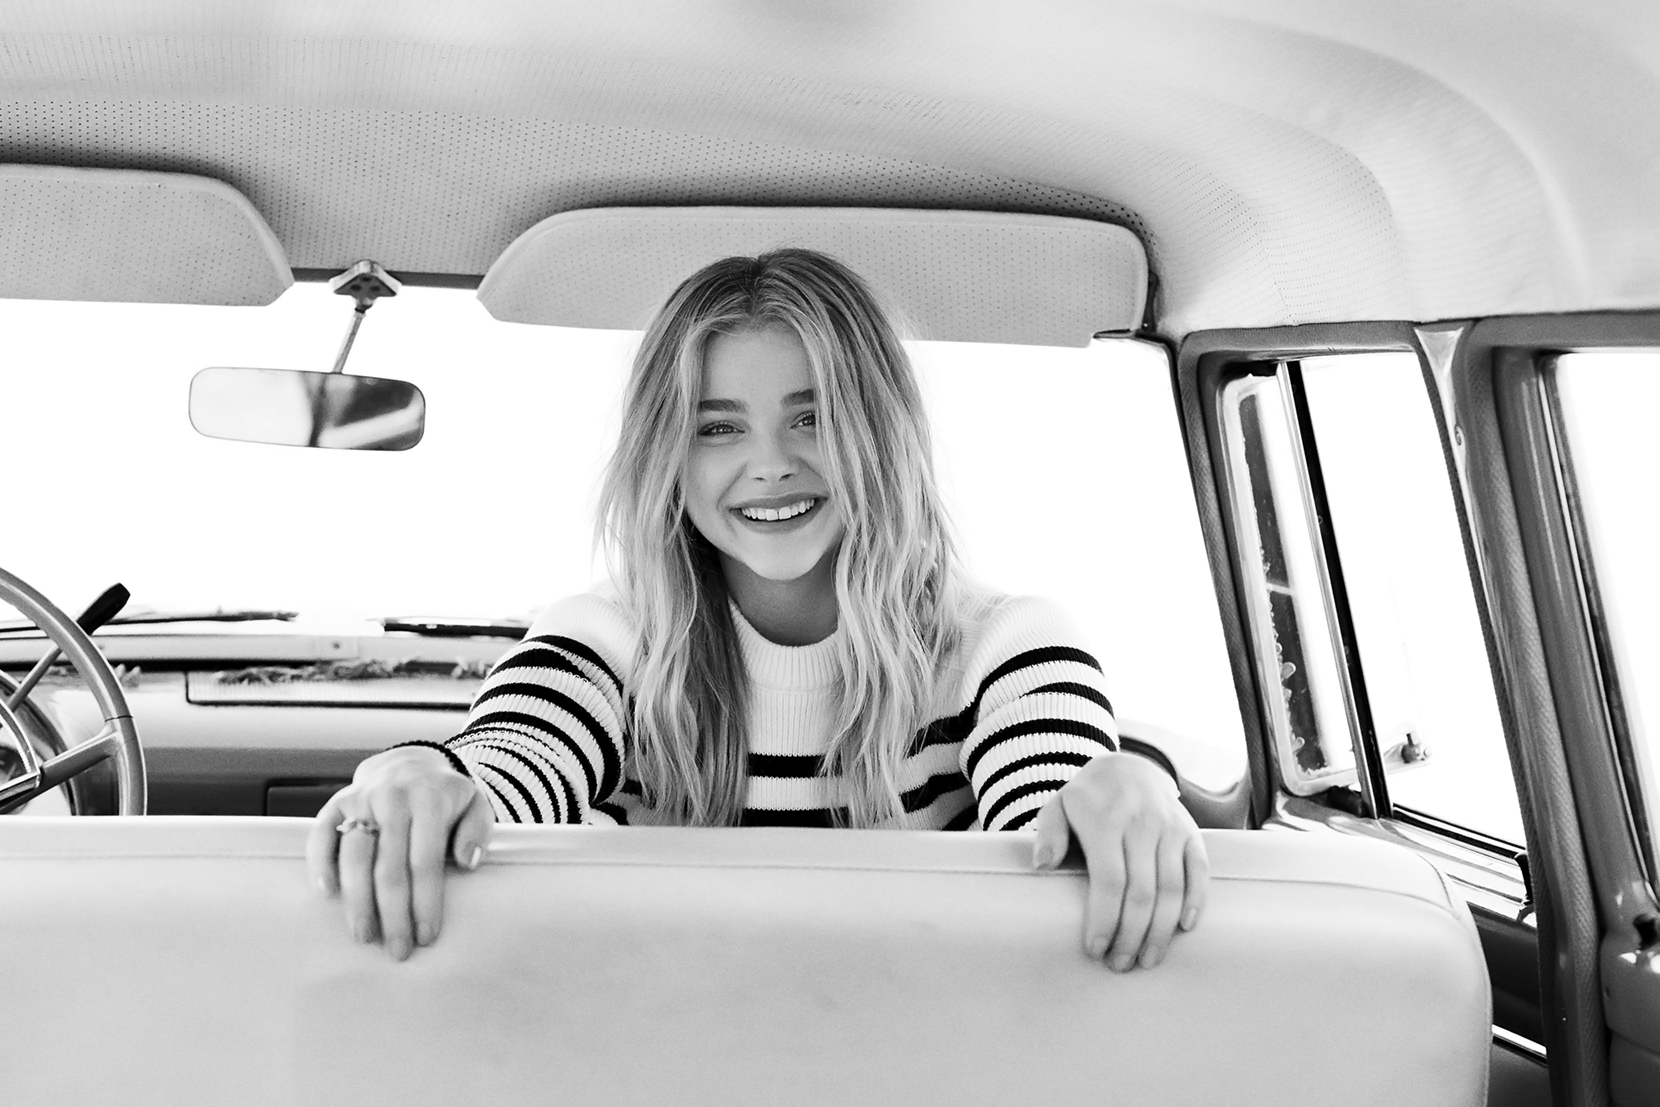 People 1660x1107 Chloë Grace Moretz actress blonde women car interior vehicle smiling